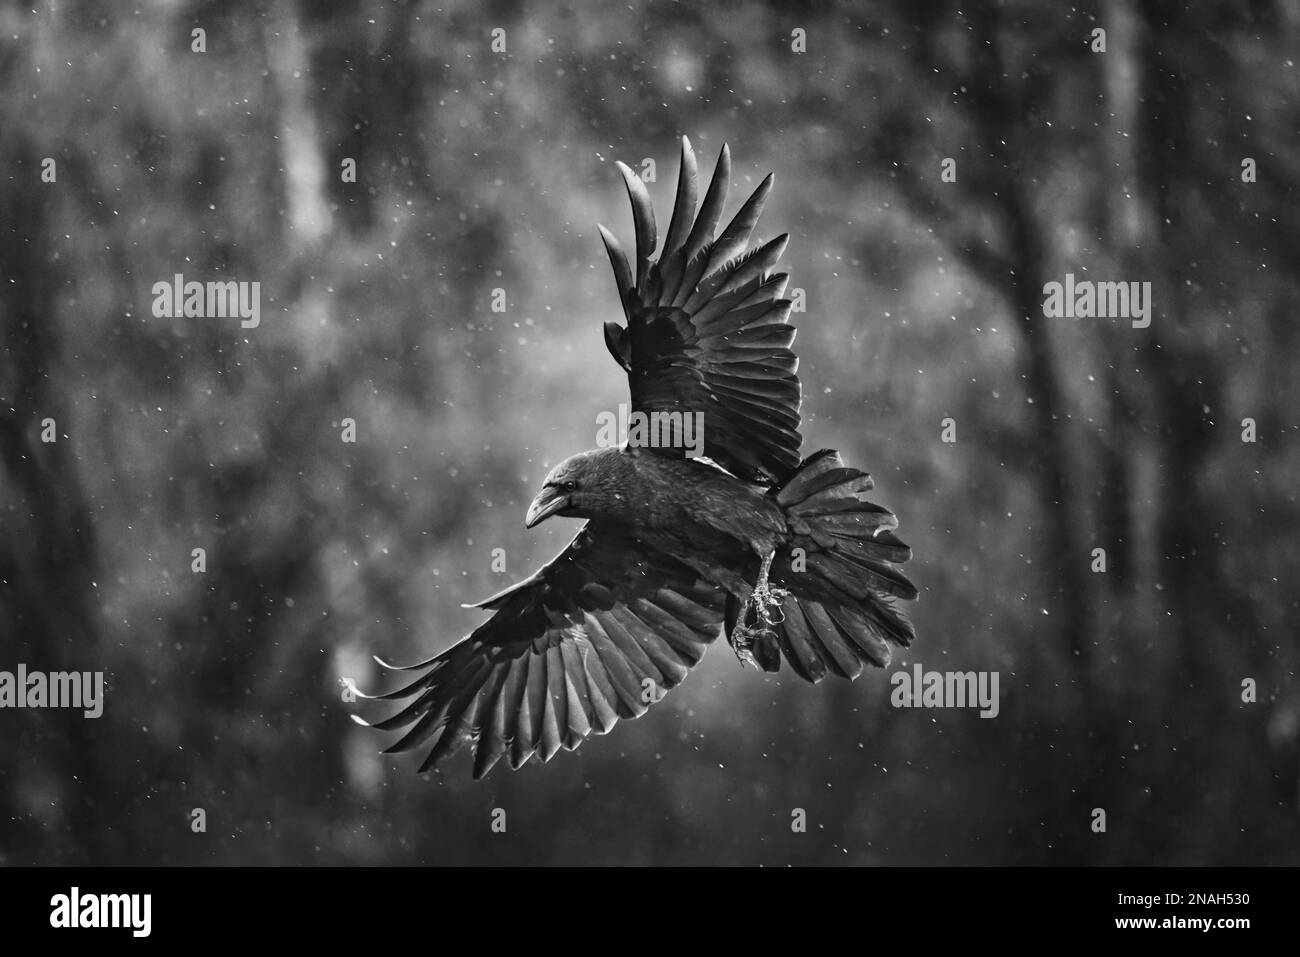 Flying black raven bird (Corvus corax) with open wings and rain bokeh, wildlife in nature Stock Photo